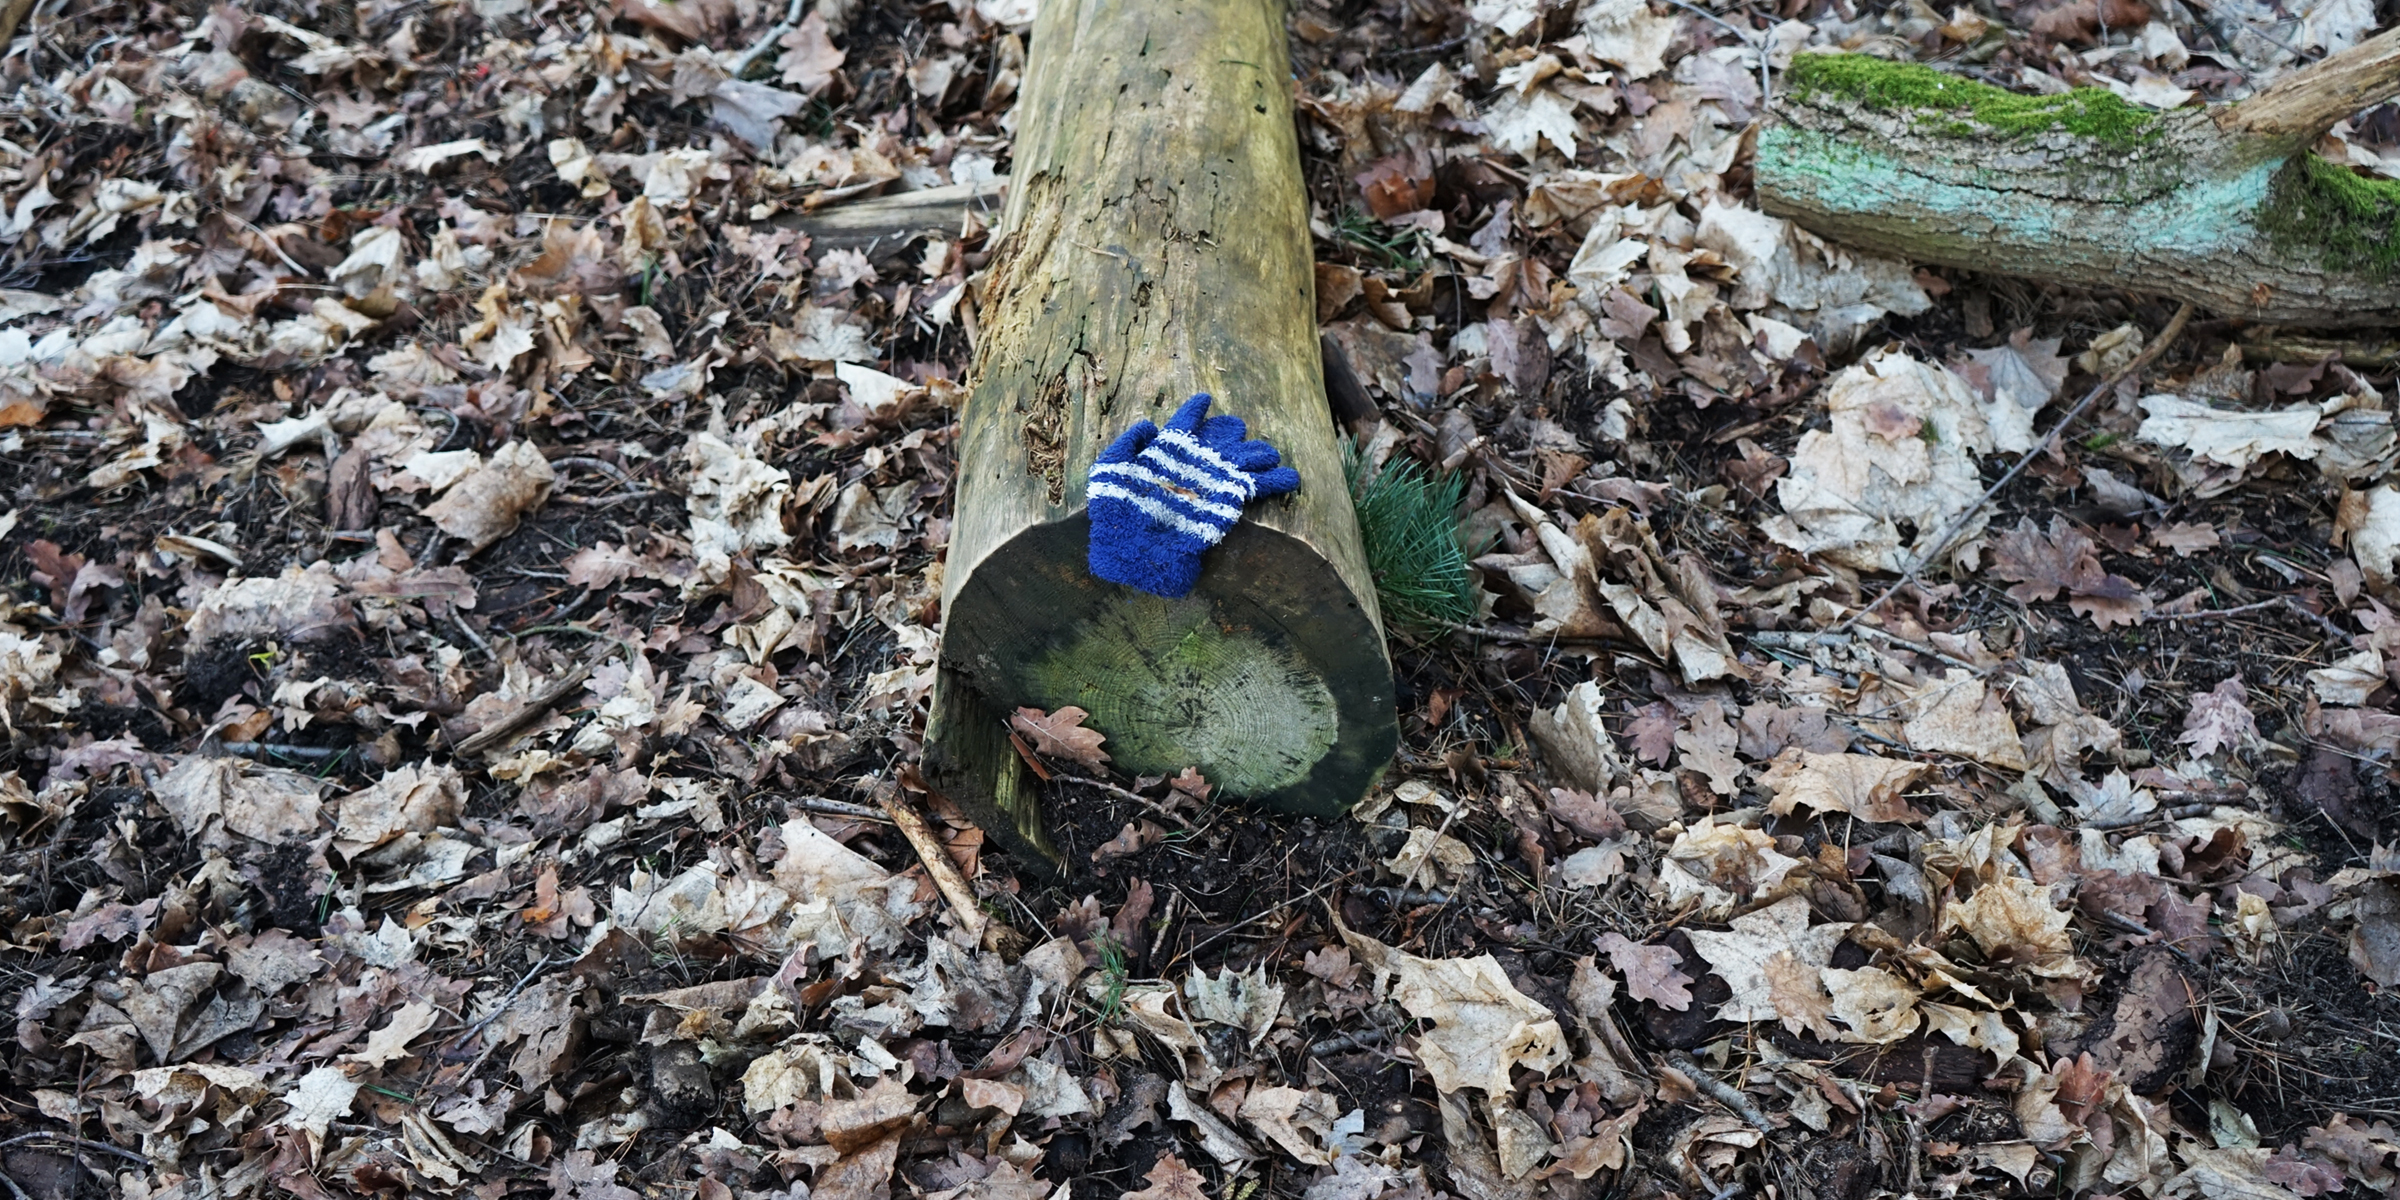 Child's glove lying on a fallen log | Source: Shutterstock